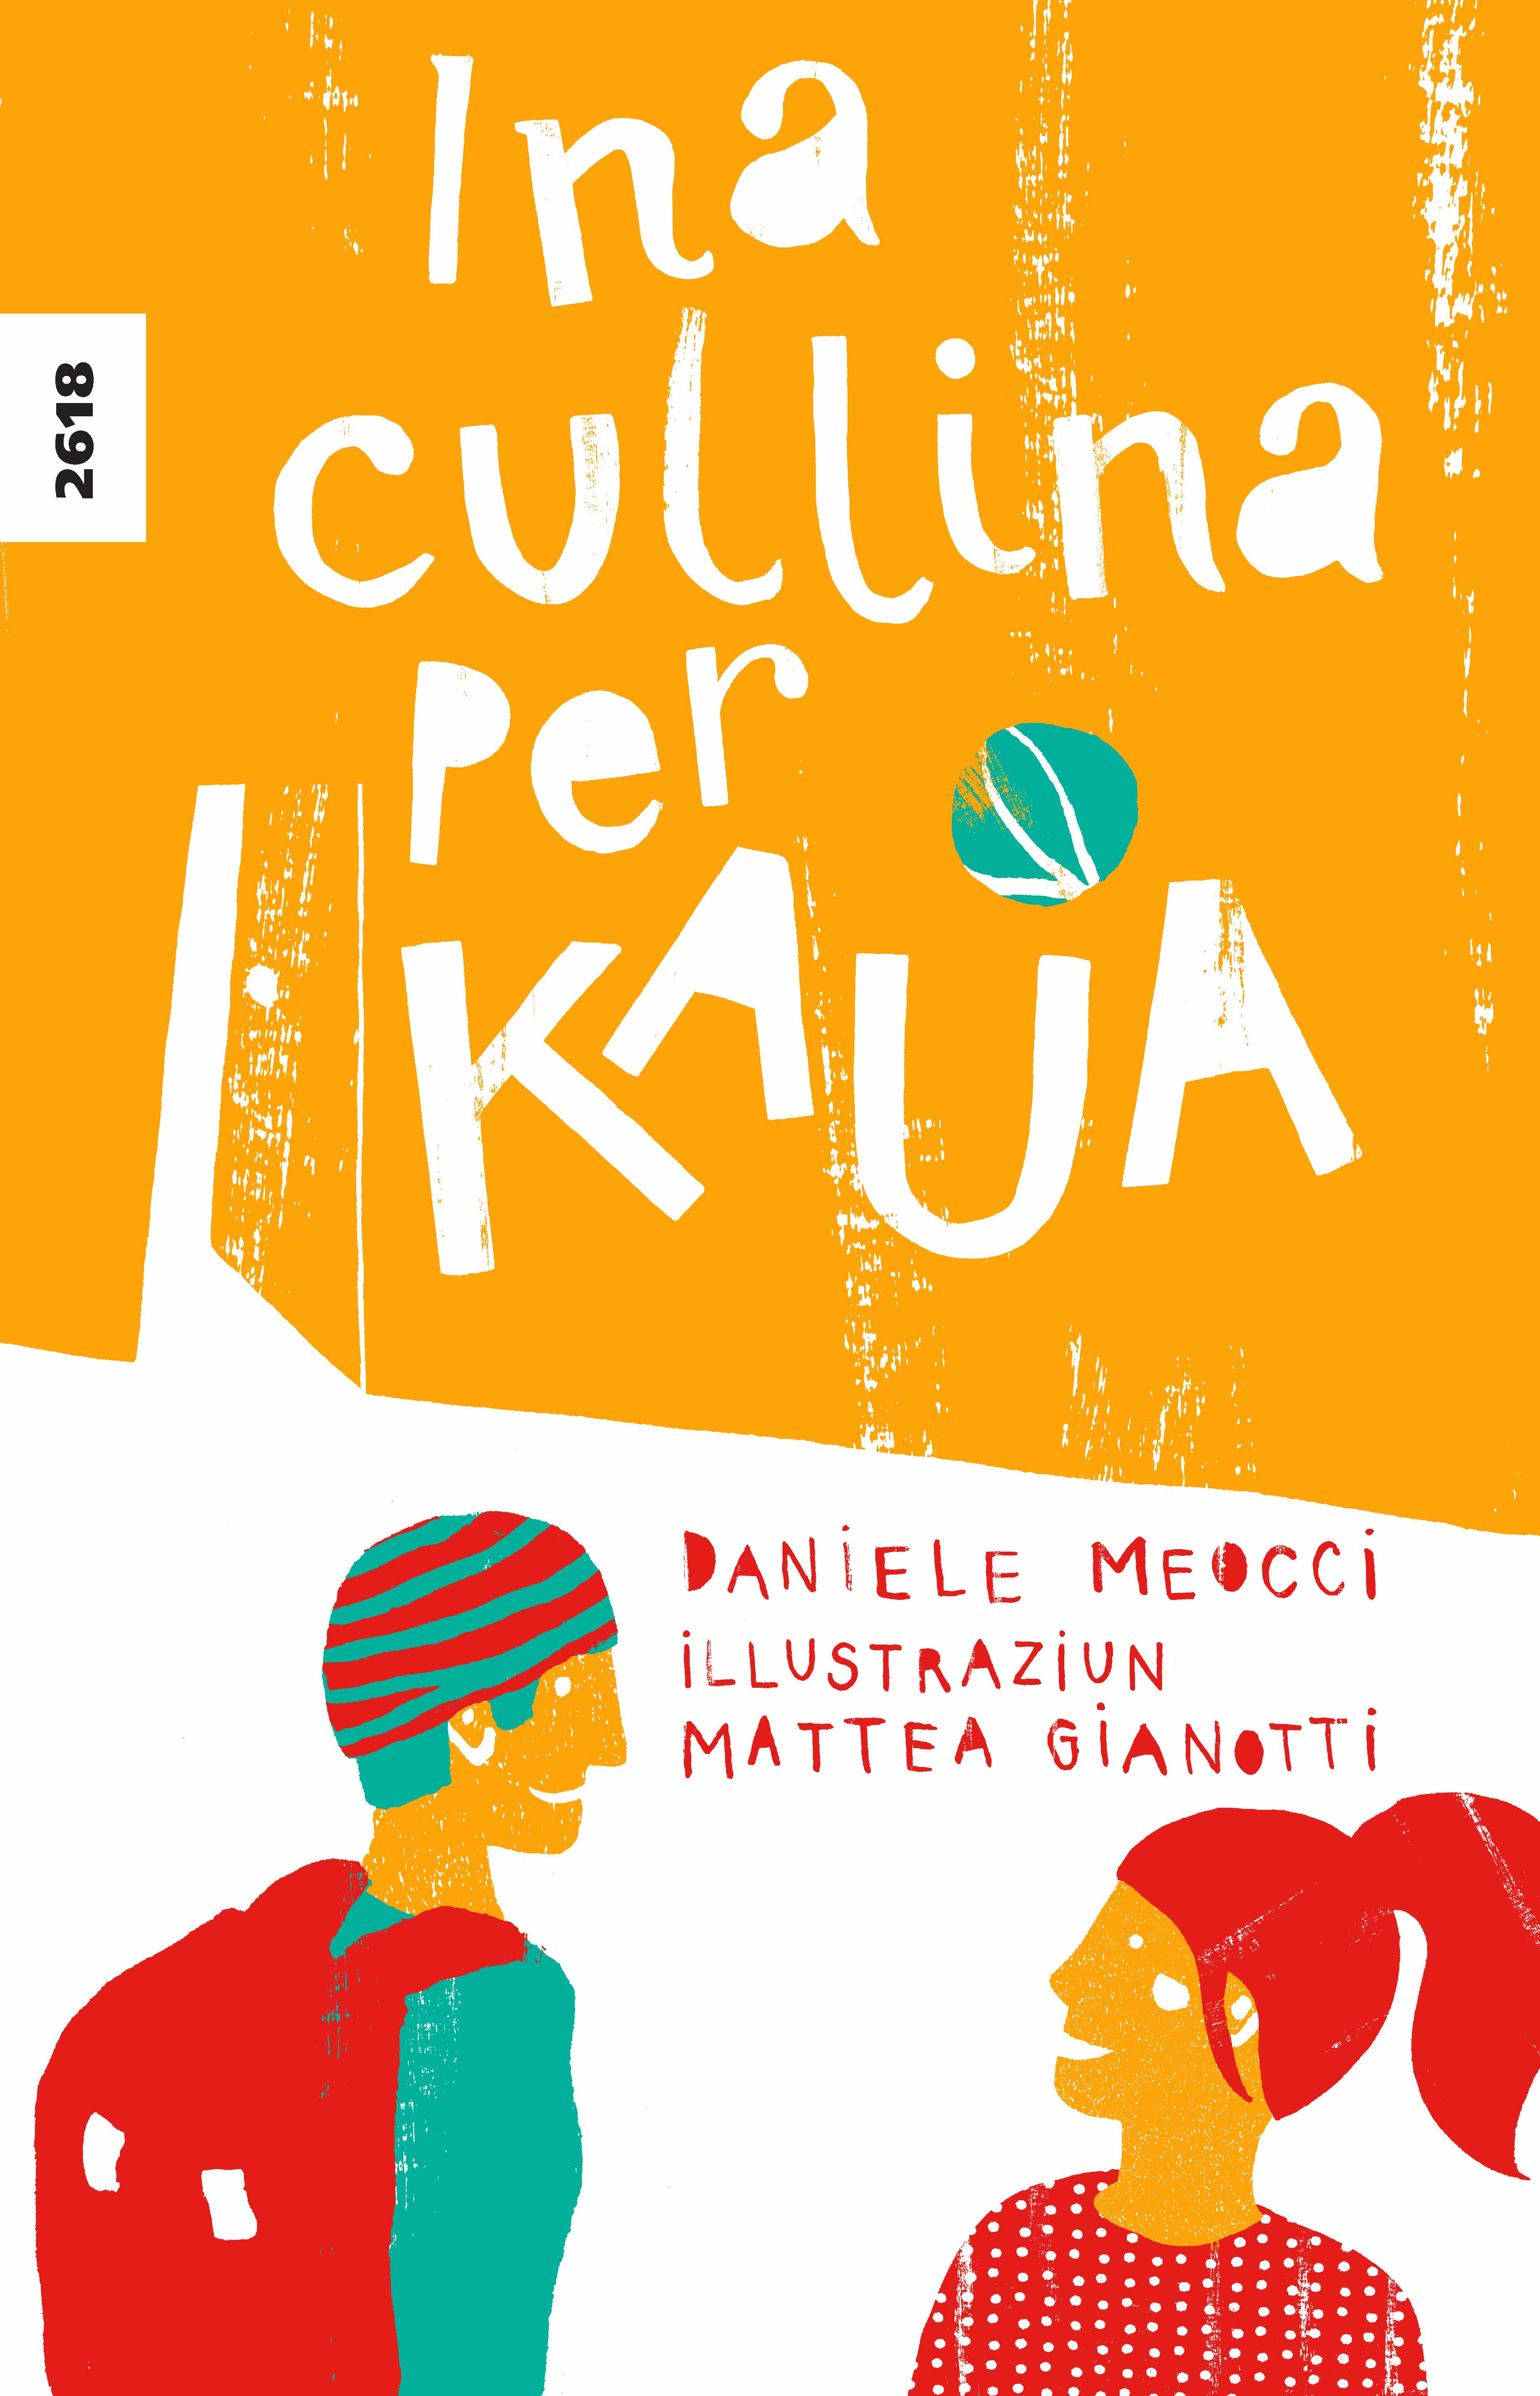 Ina cullina per Kaua, ein Kinderbuch von Daniele Meocci, Illustration von Mattea Gianotti, SJW Verlag, Migration